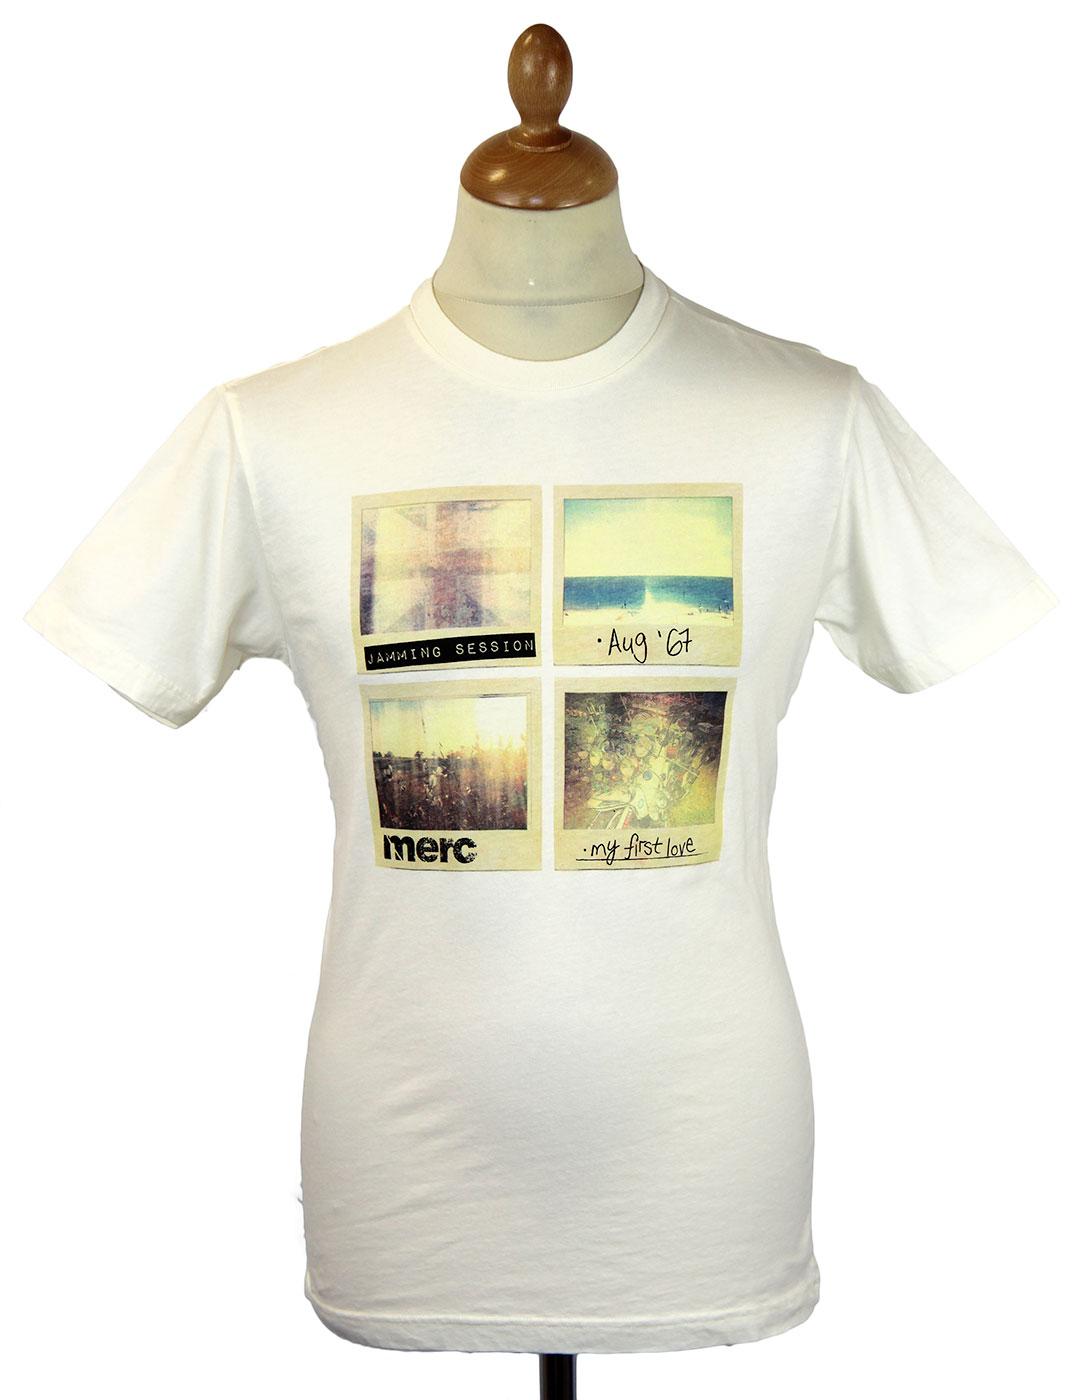 Evans MERC Retro Indie Mod Vintage Photo T-shirt